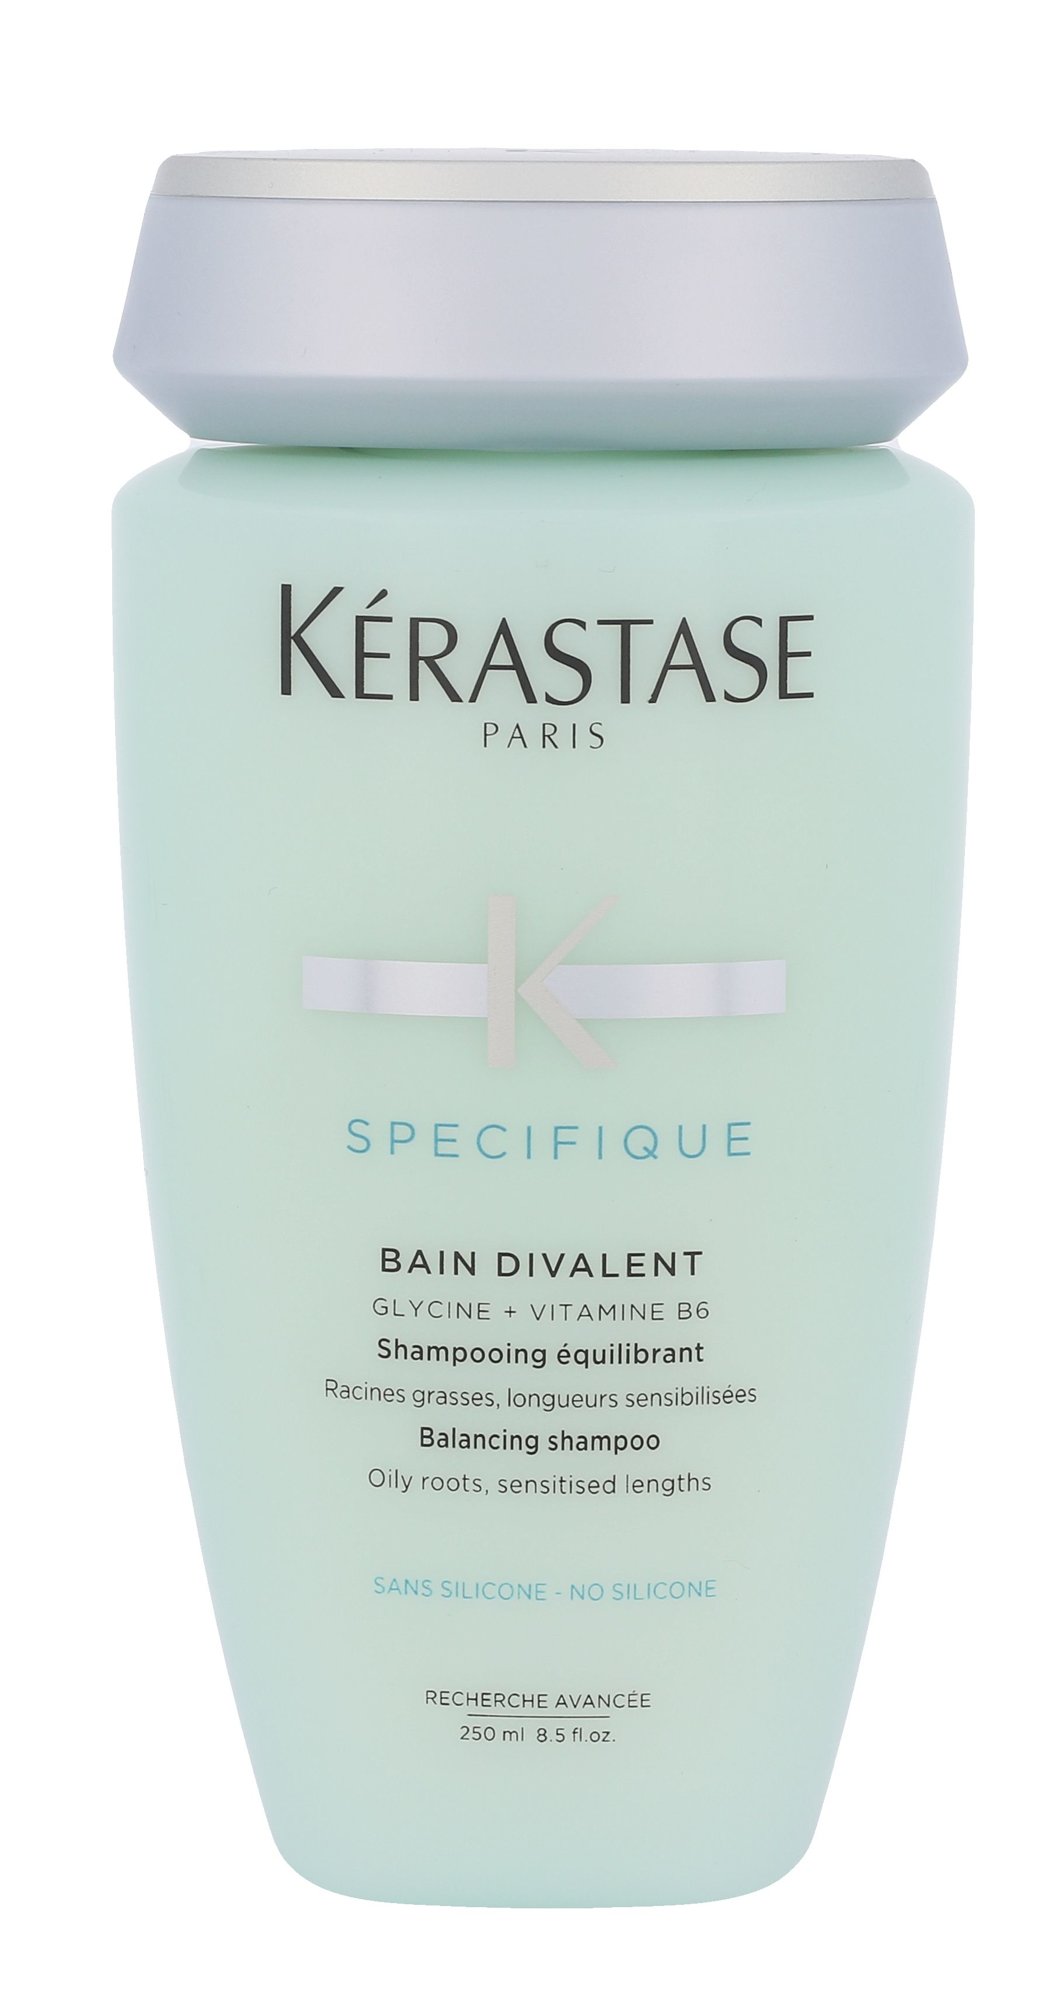 Kerastase Specifique Bain Divalent Balancing Shampoo Oily